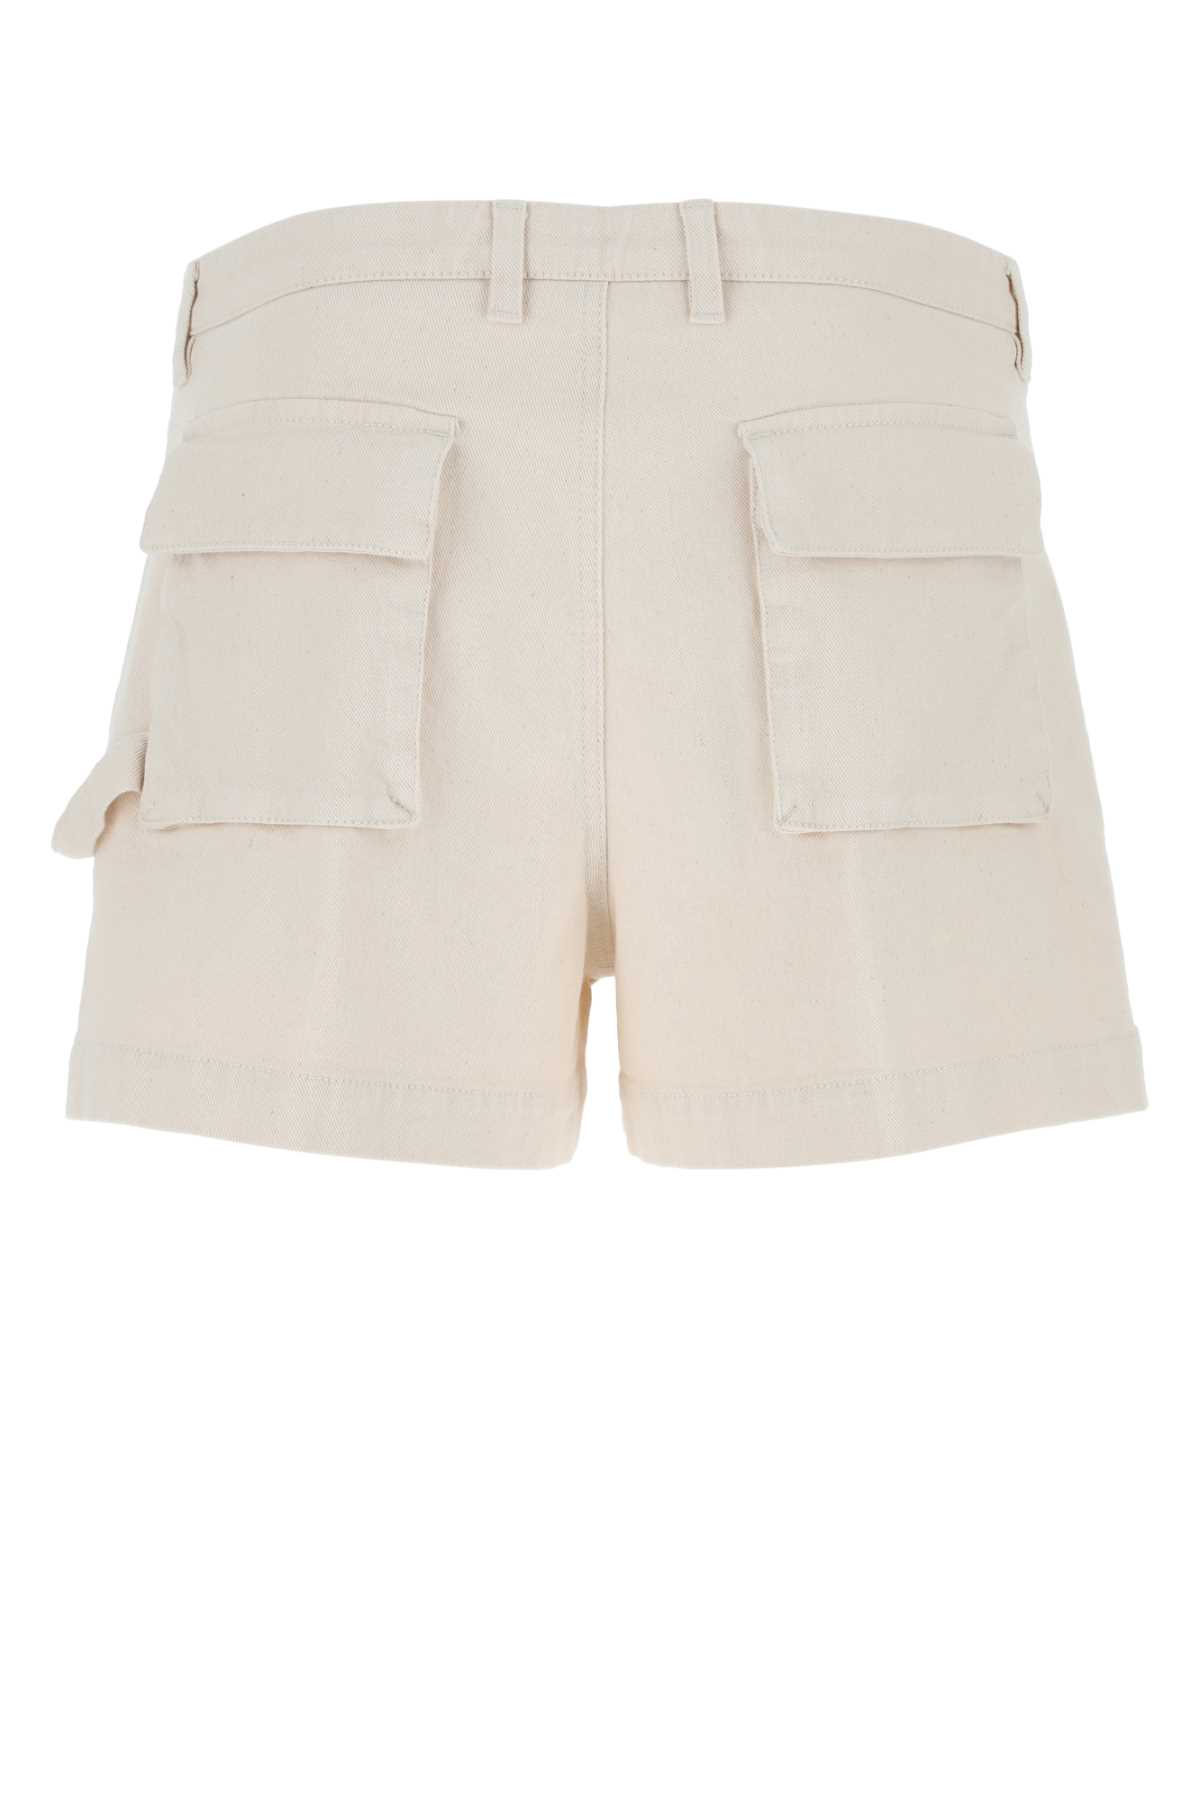 Etro Melange Ivory Stretch Cotton Shorts In White